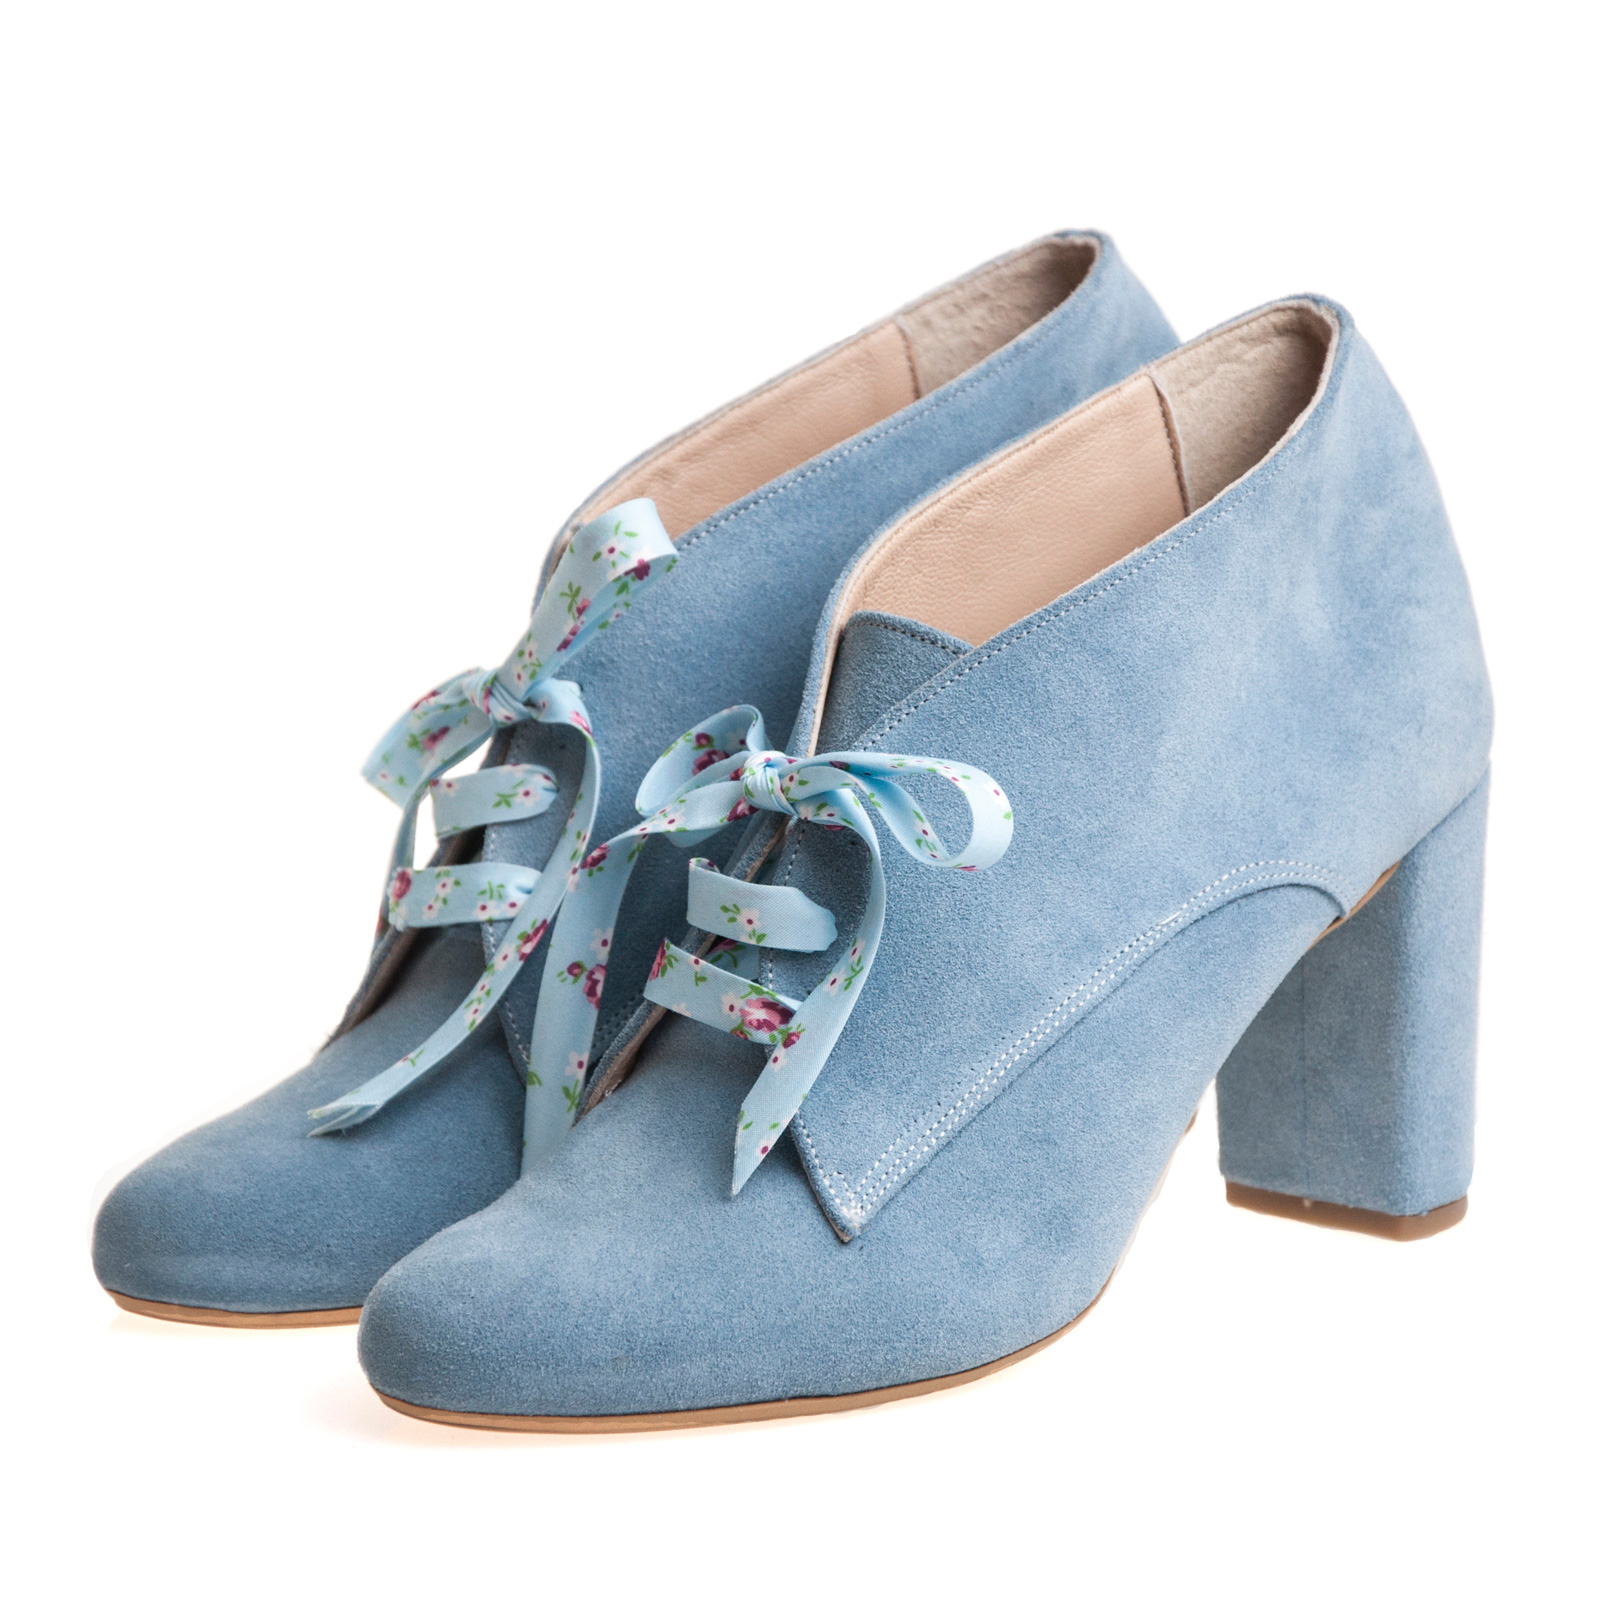 blue oxford heels